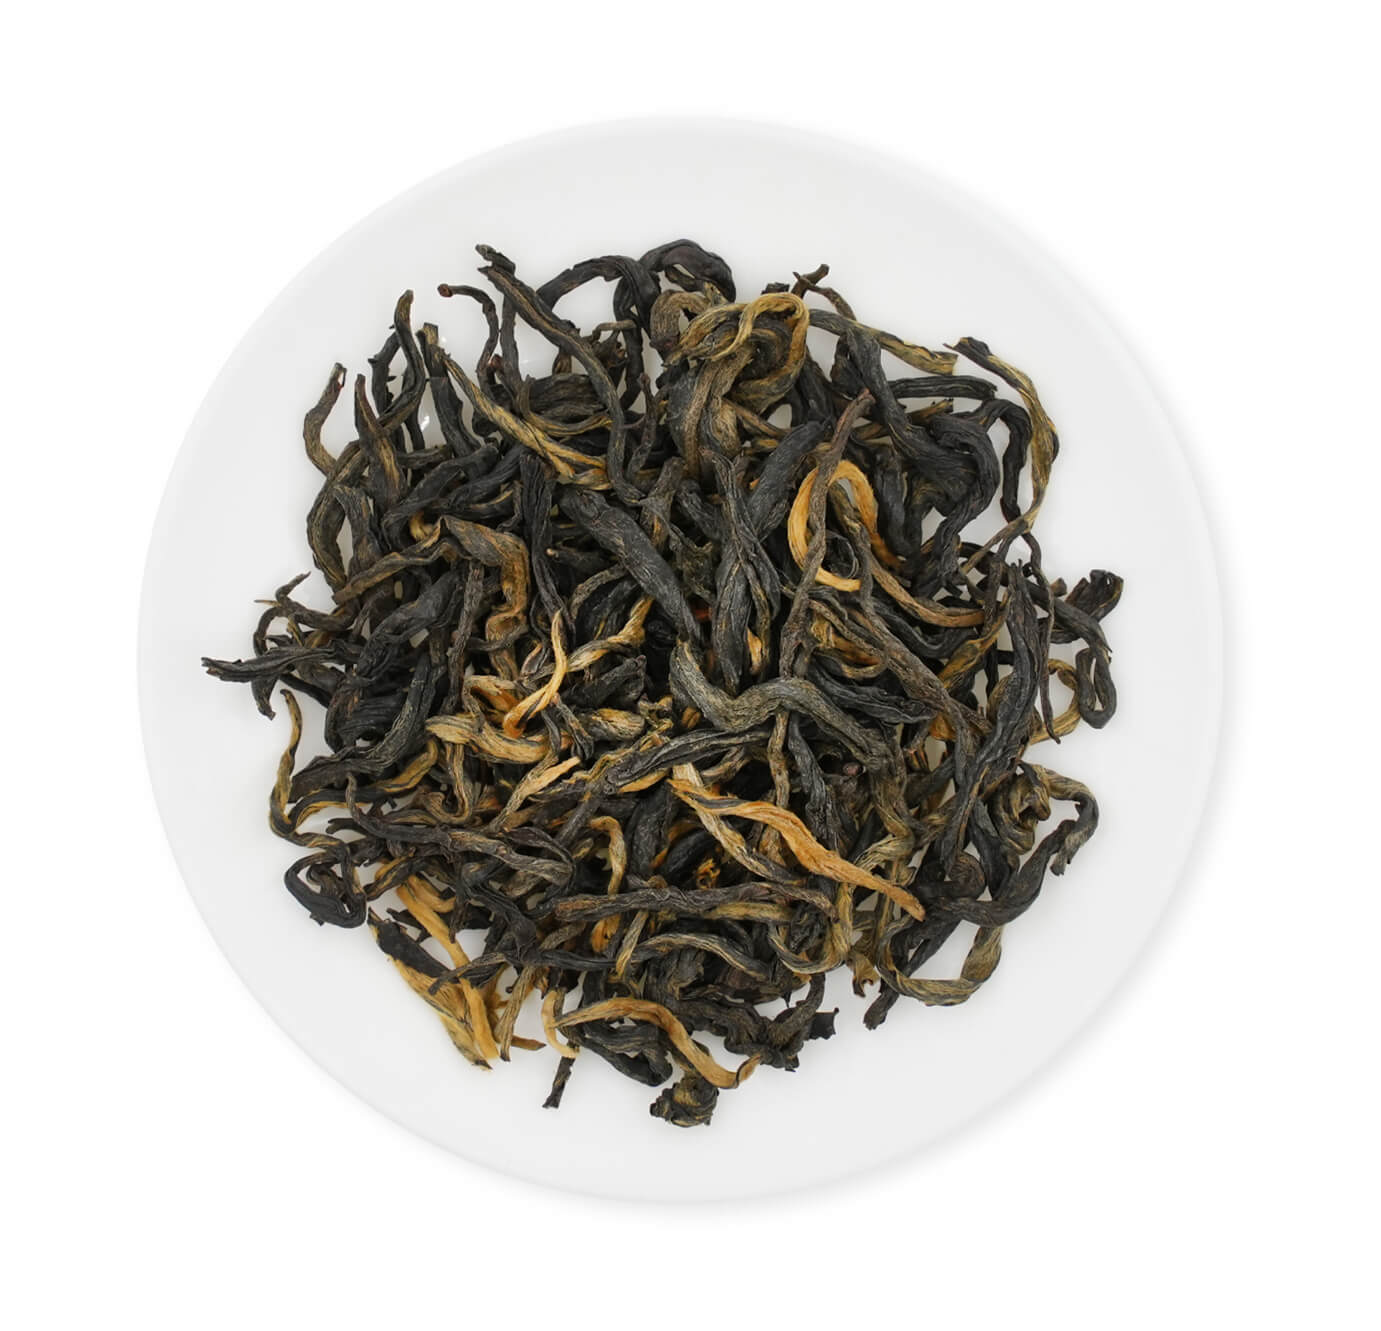 Yunnan-Black-Tea-details-shape-leaves-details